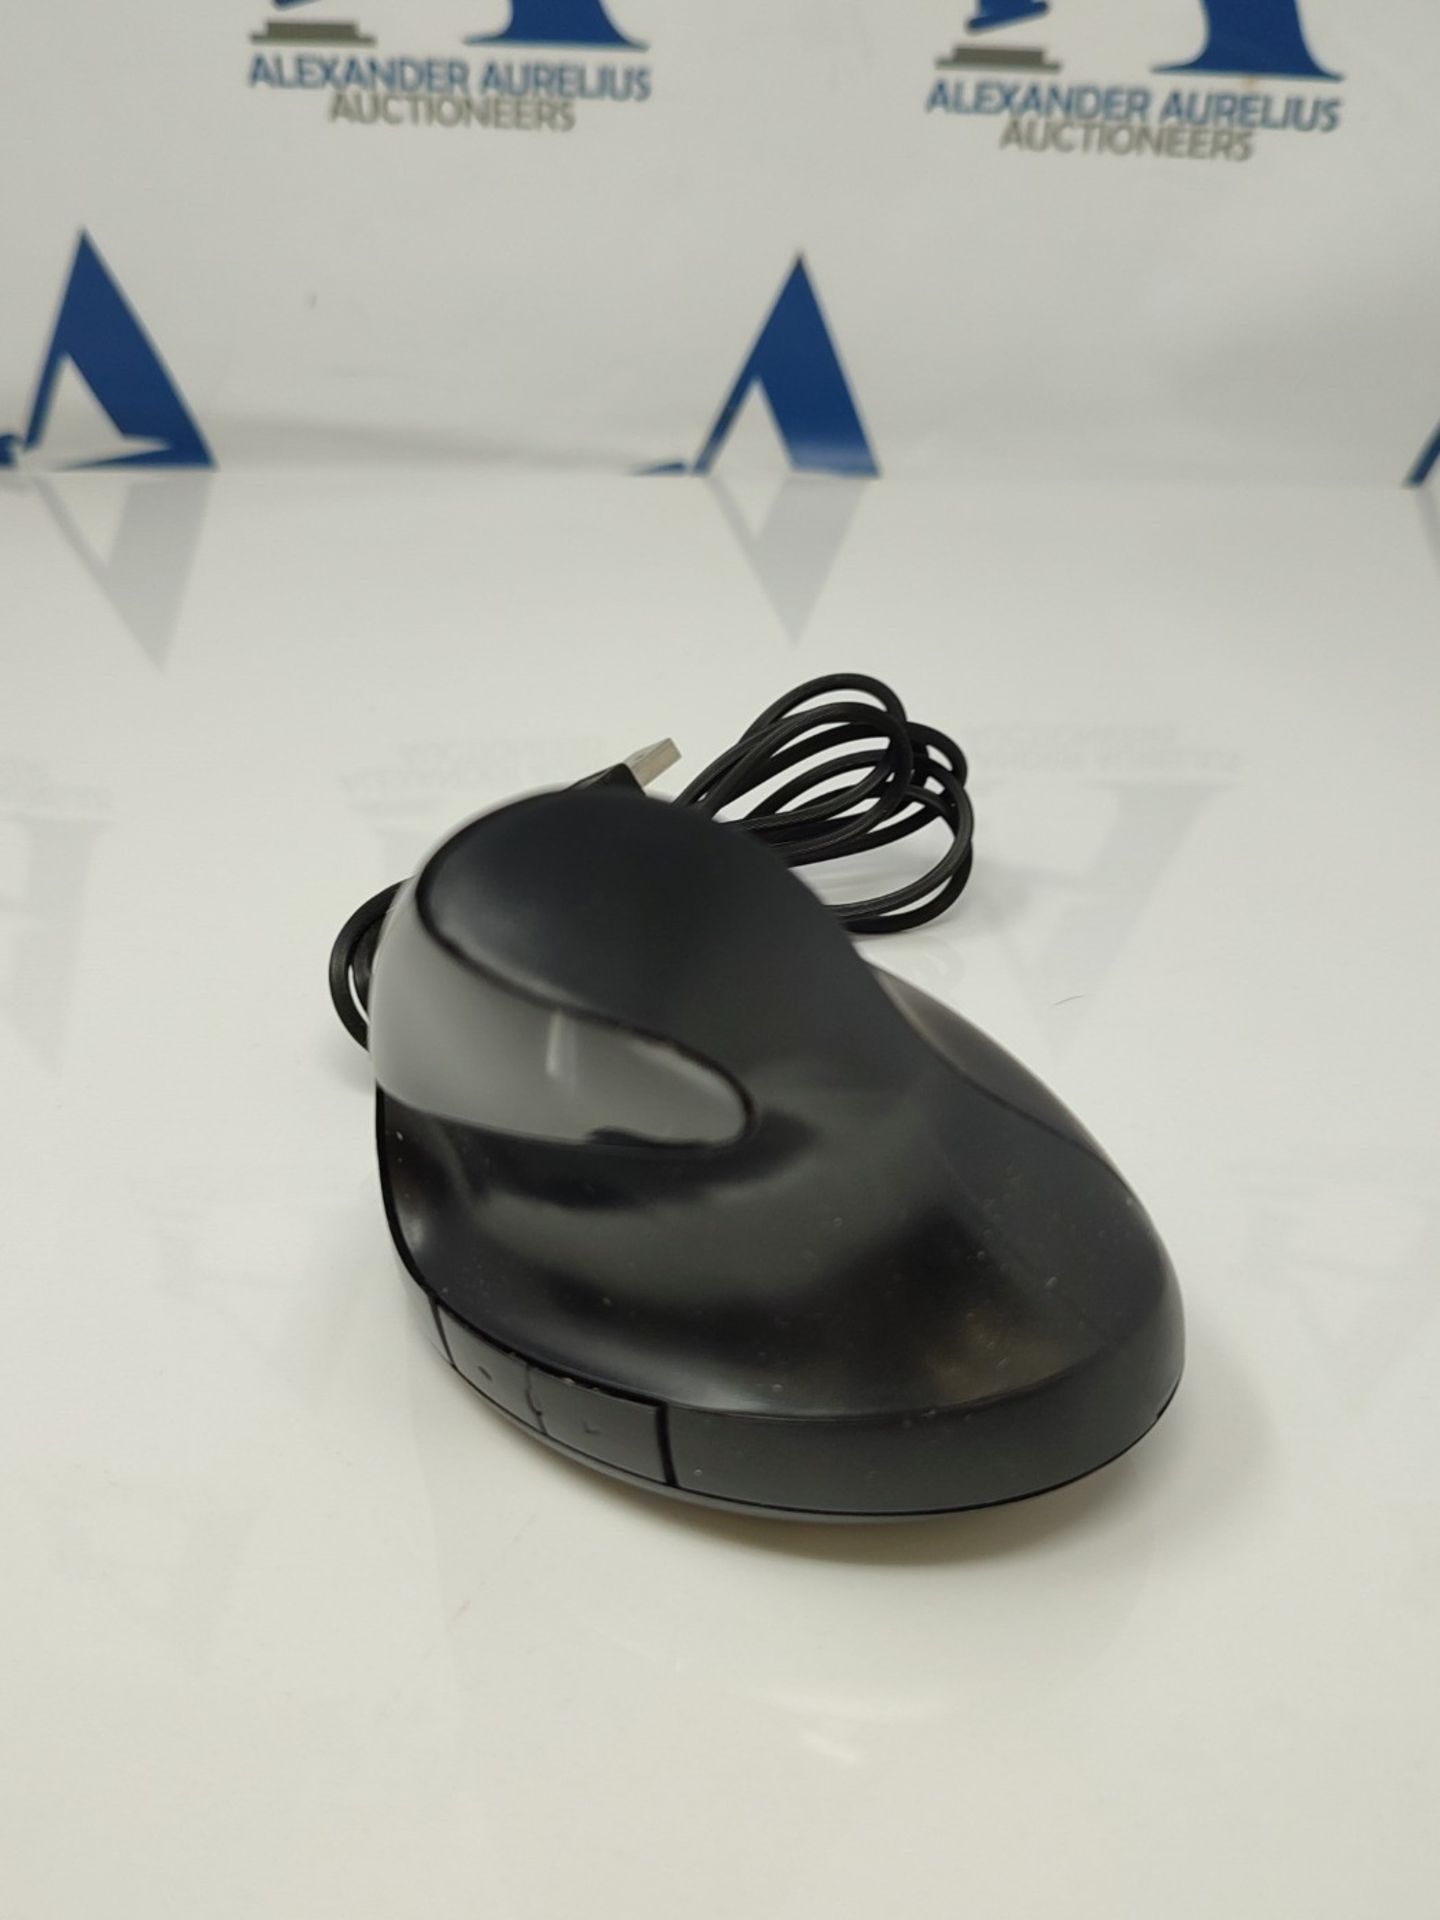 Ewent-vertical ergonomic mouse ew3156 - Image 3 of 3